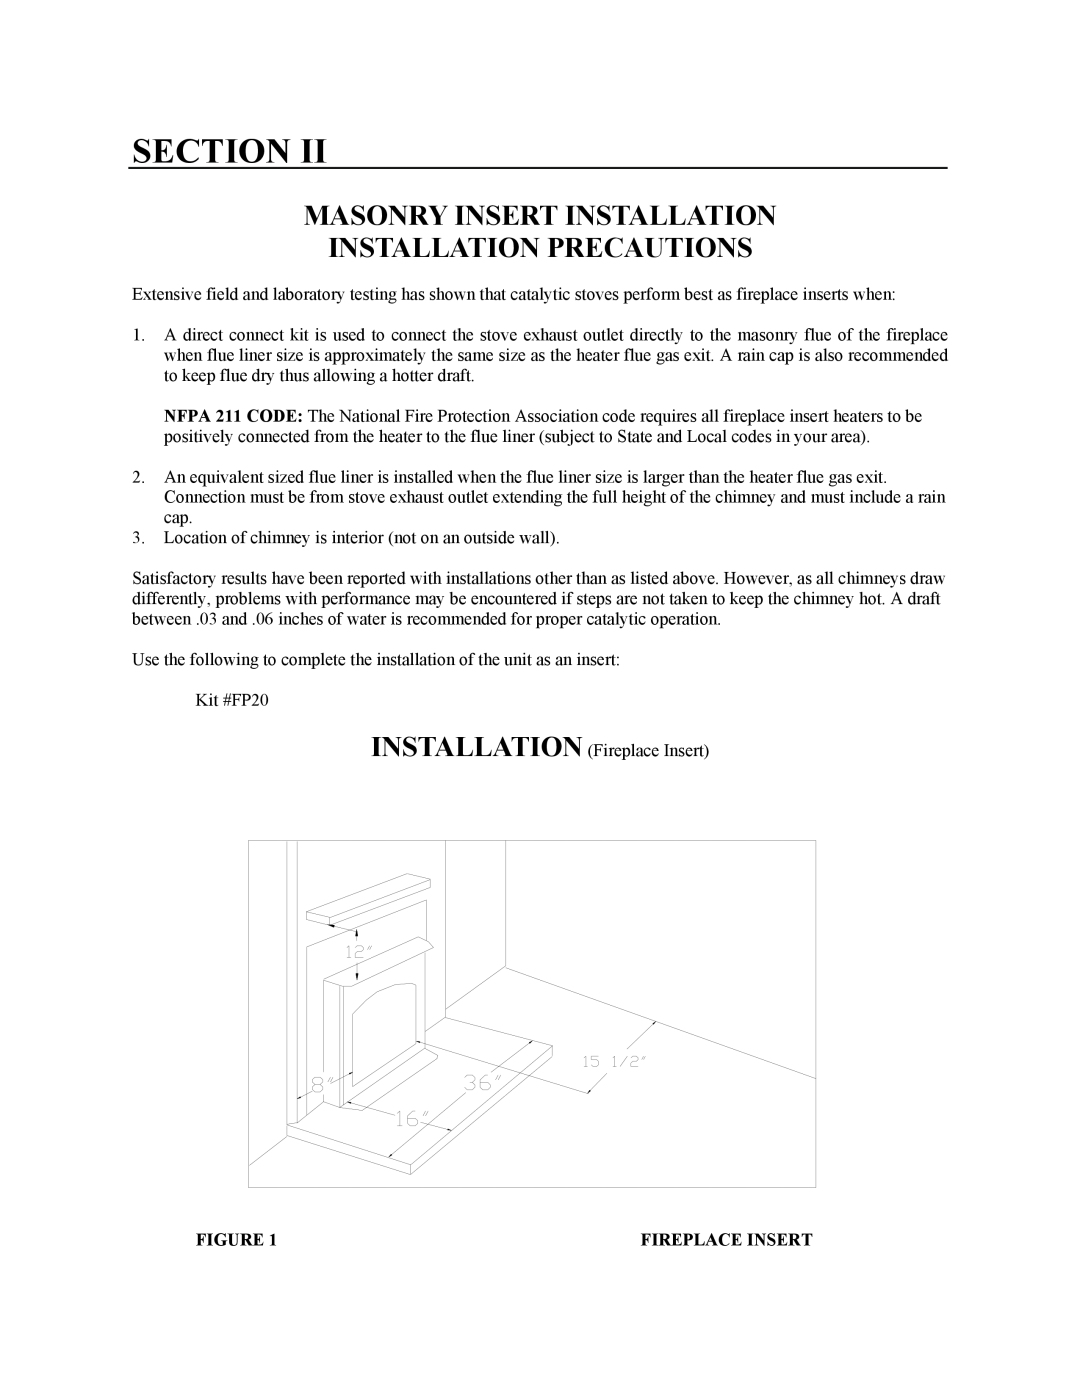 New Buck Corporation 20 Room Heater manual Masonry Insert Installation, Installation Precautions, Fireplace Insert, Section 